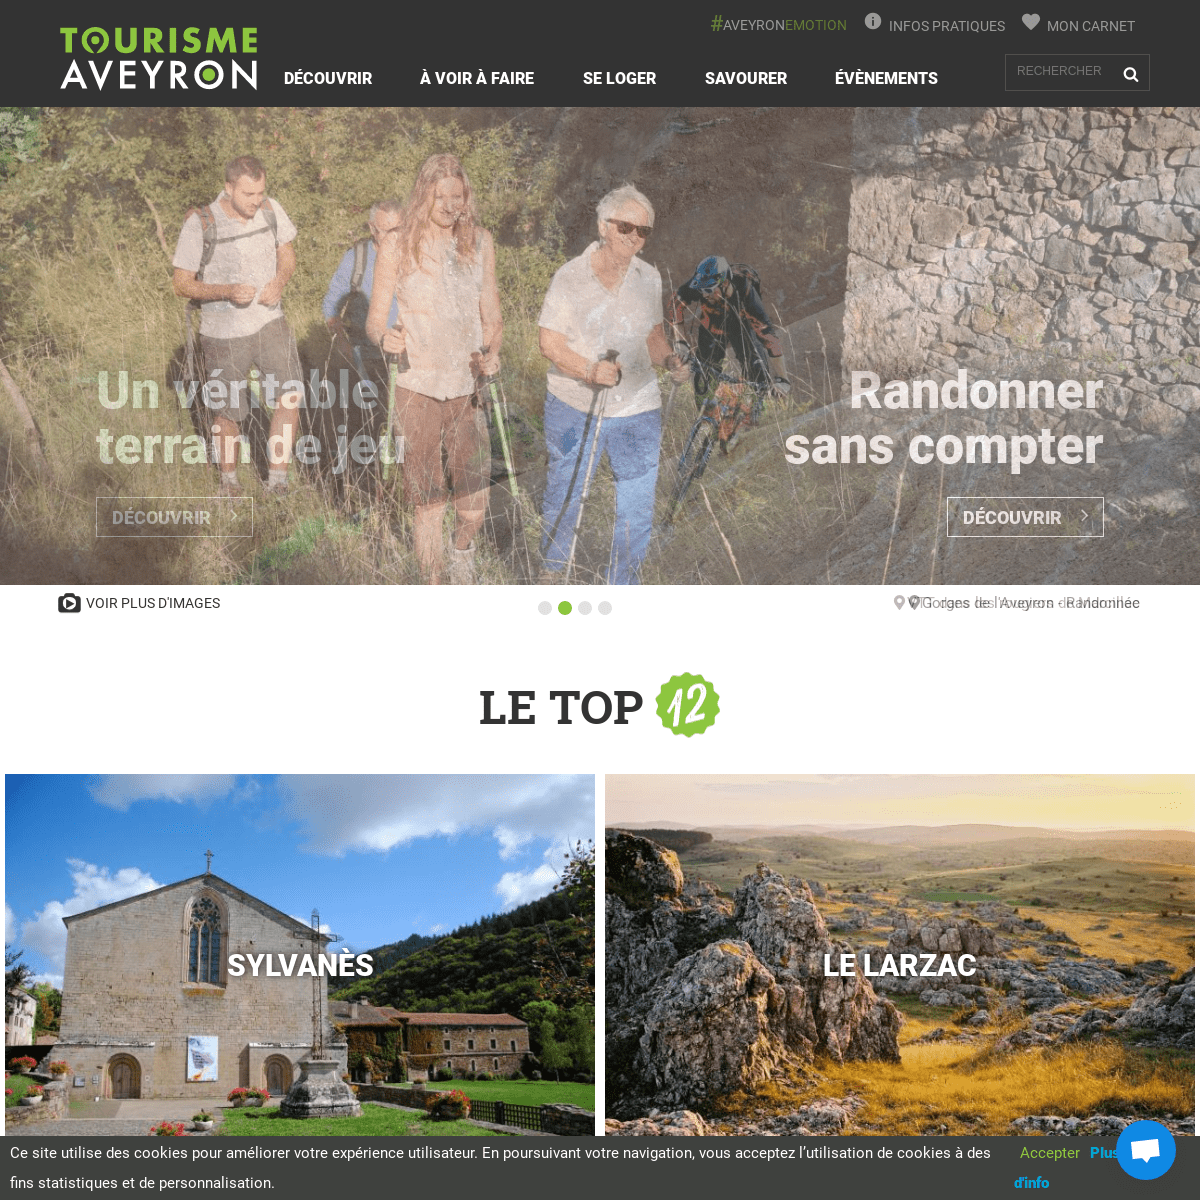 A complete backup of tourisme-aveyron.com